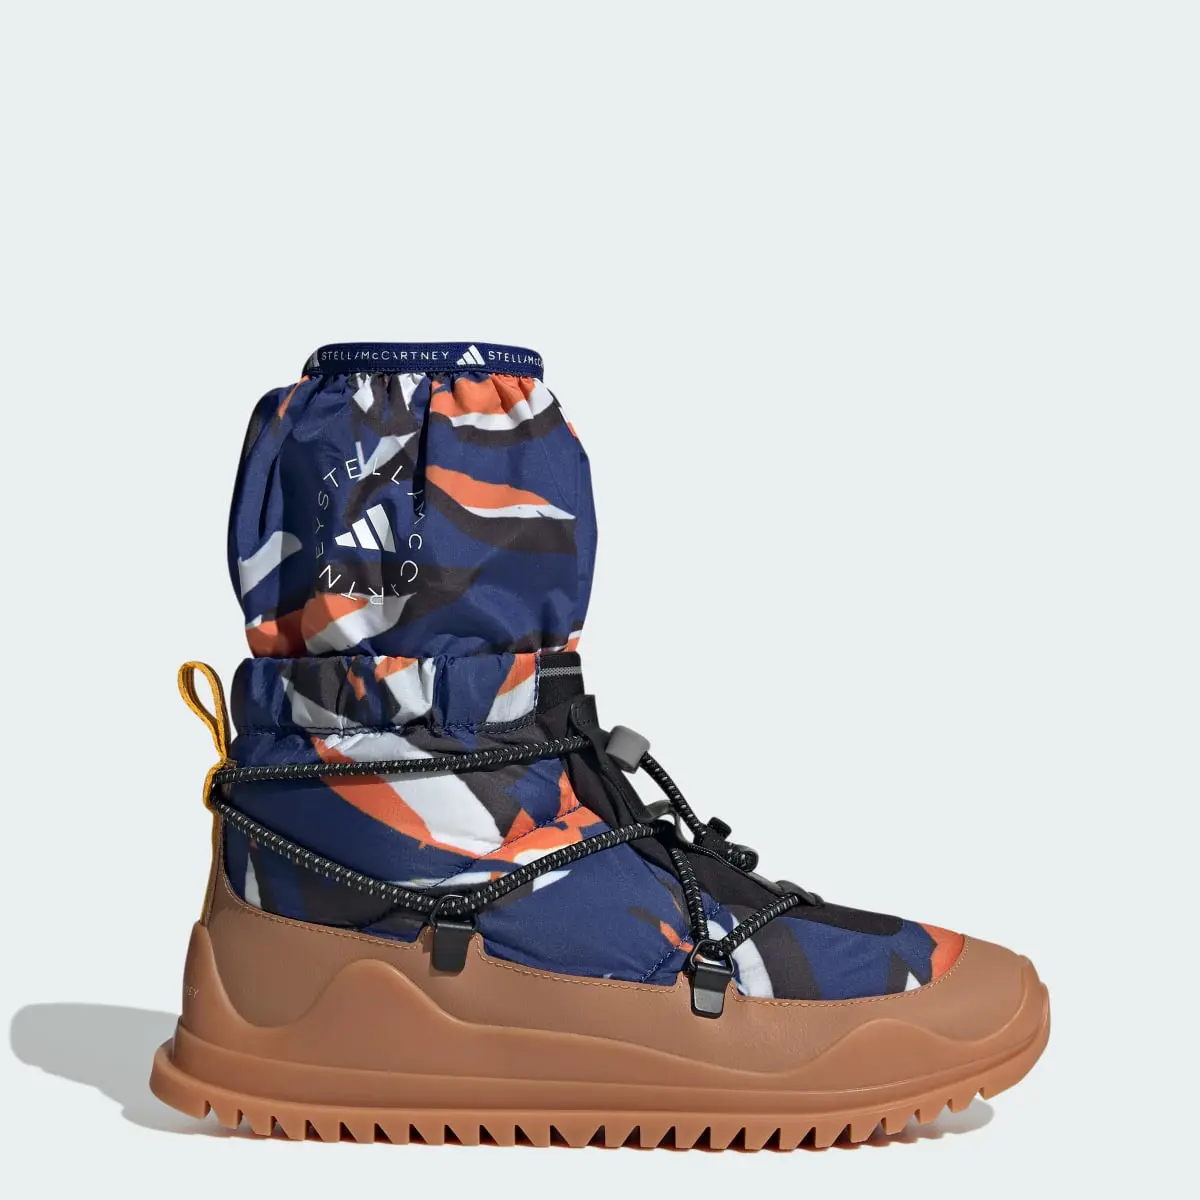 Adidas by Stella McCartney Winter Boots. 1